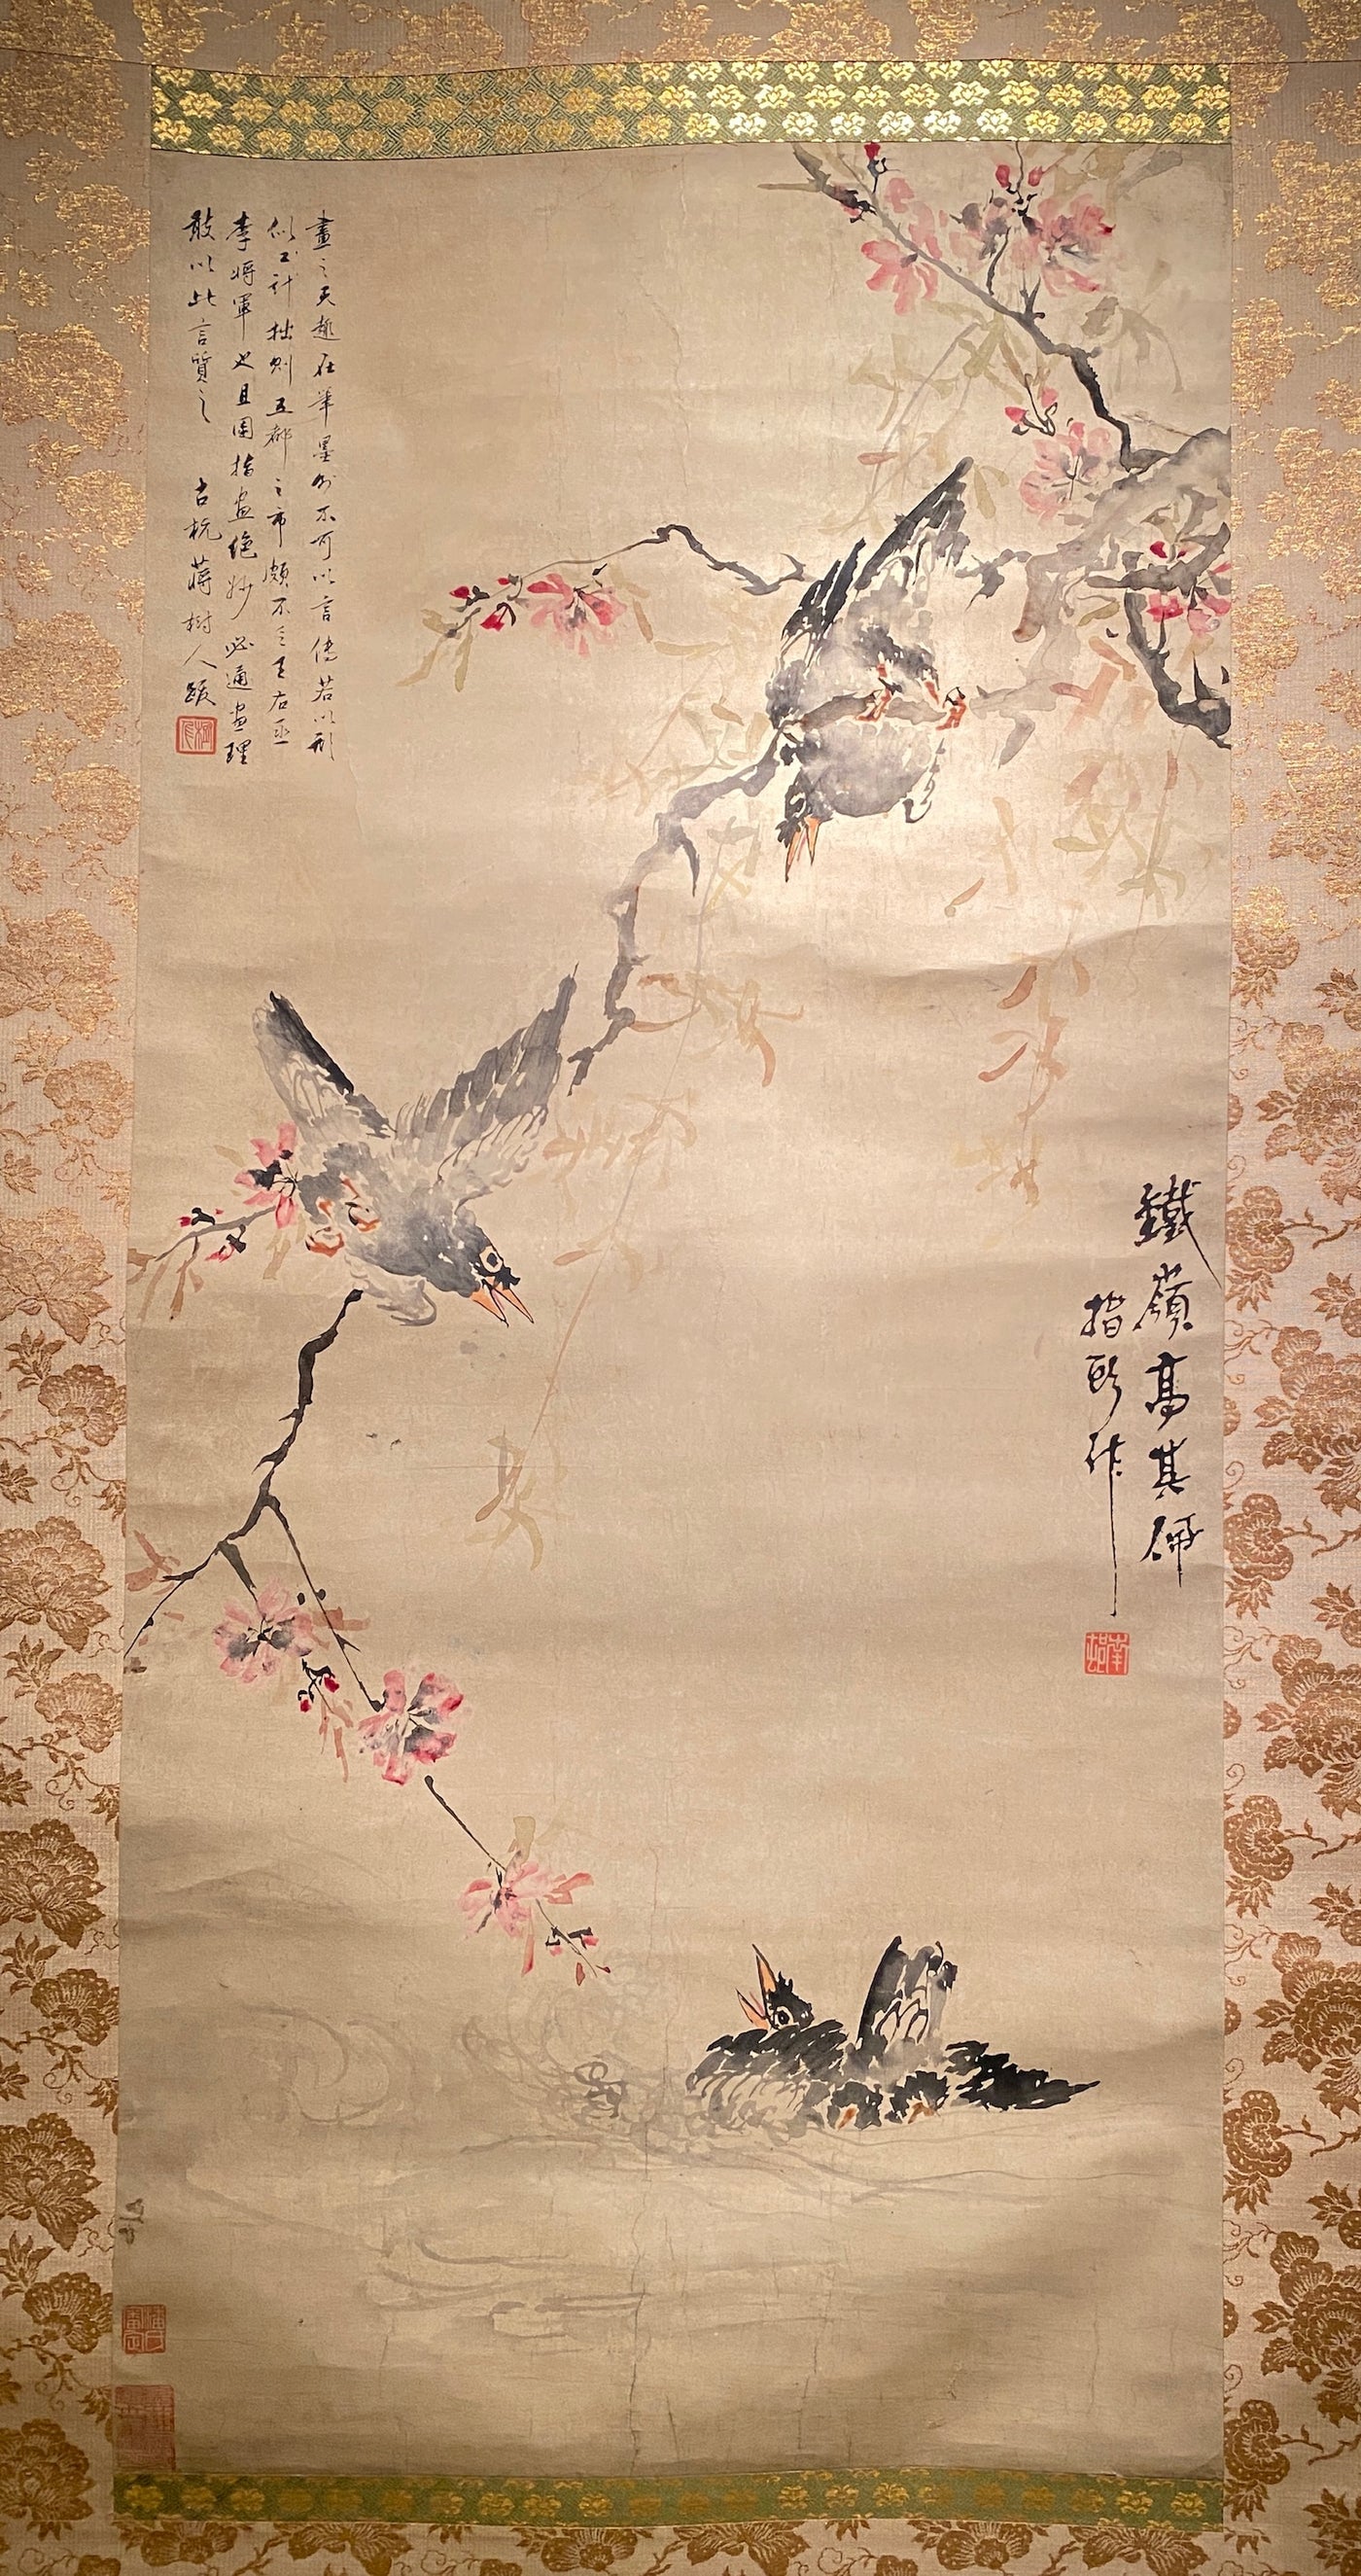 高其佩 花鳥 指頭図 一幅 Gao Qipei "Bird and flower" from Qing dynasty